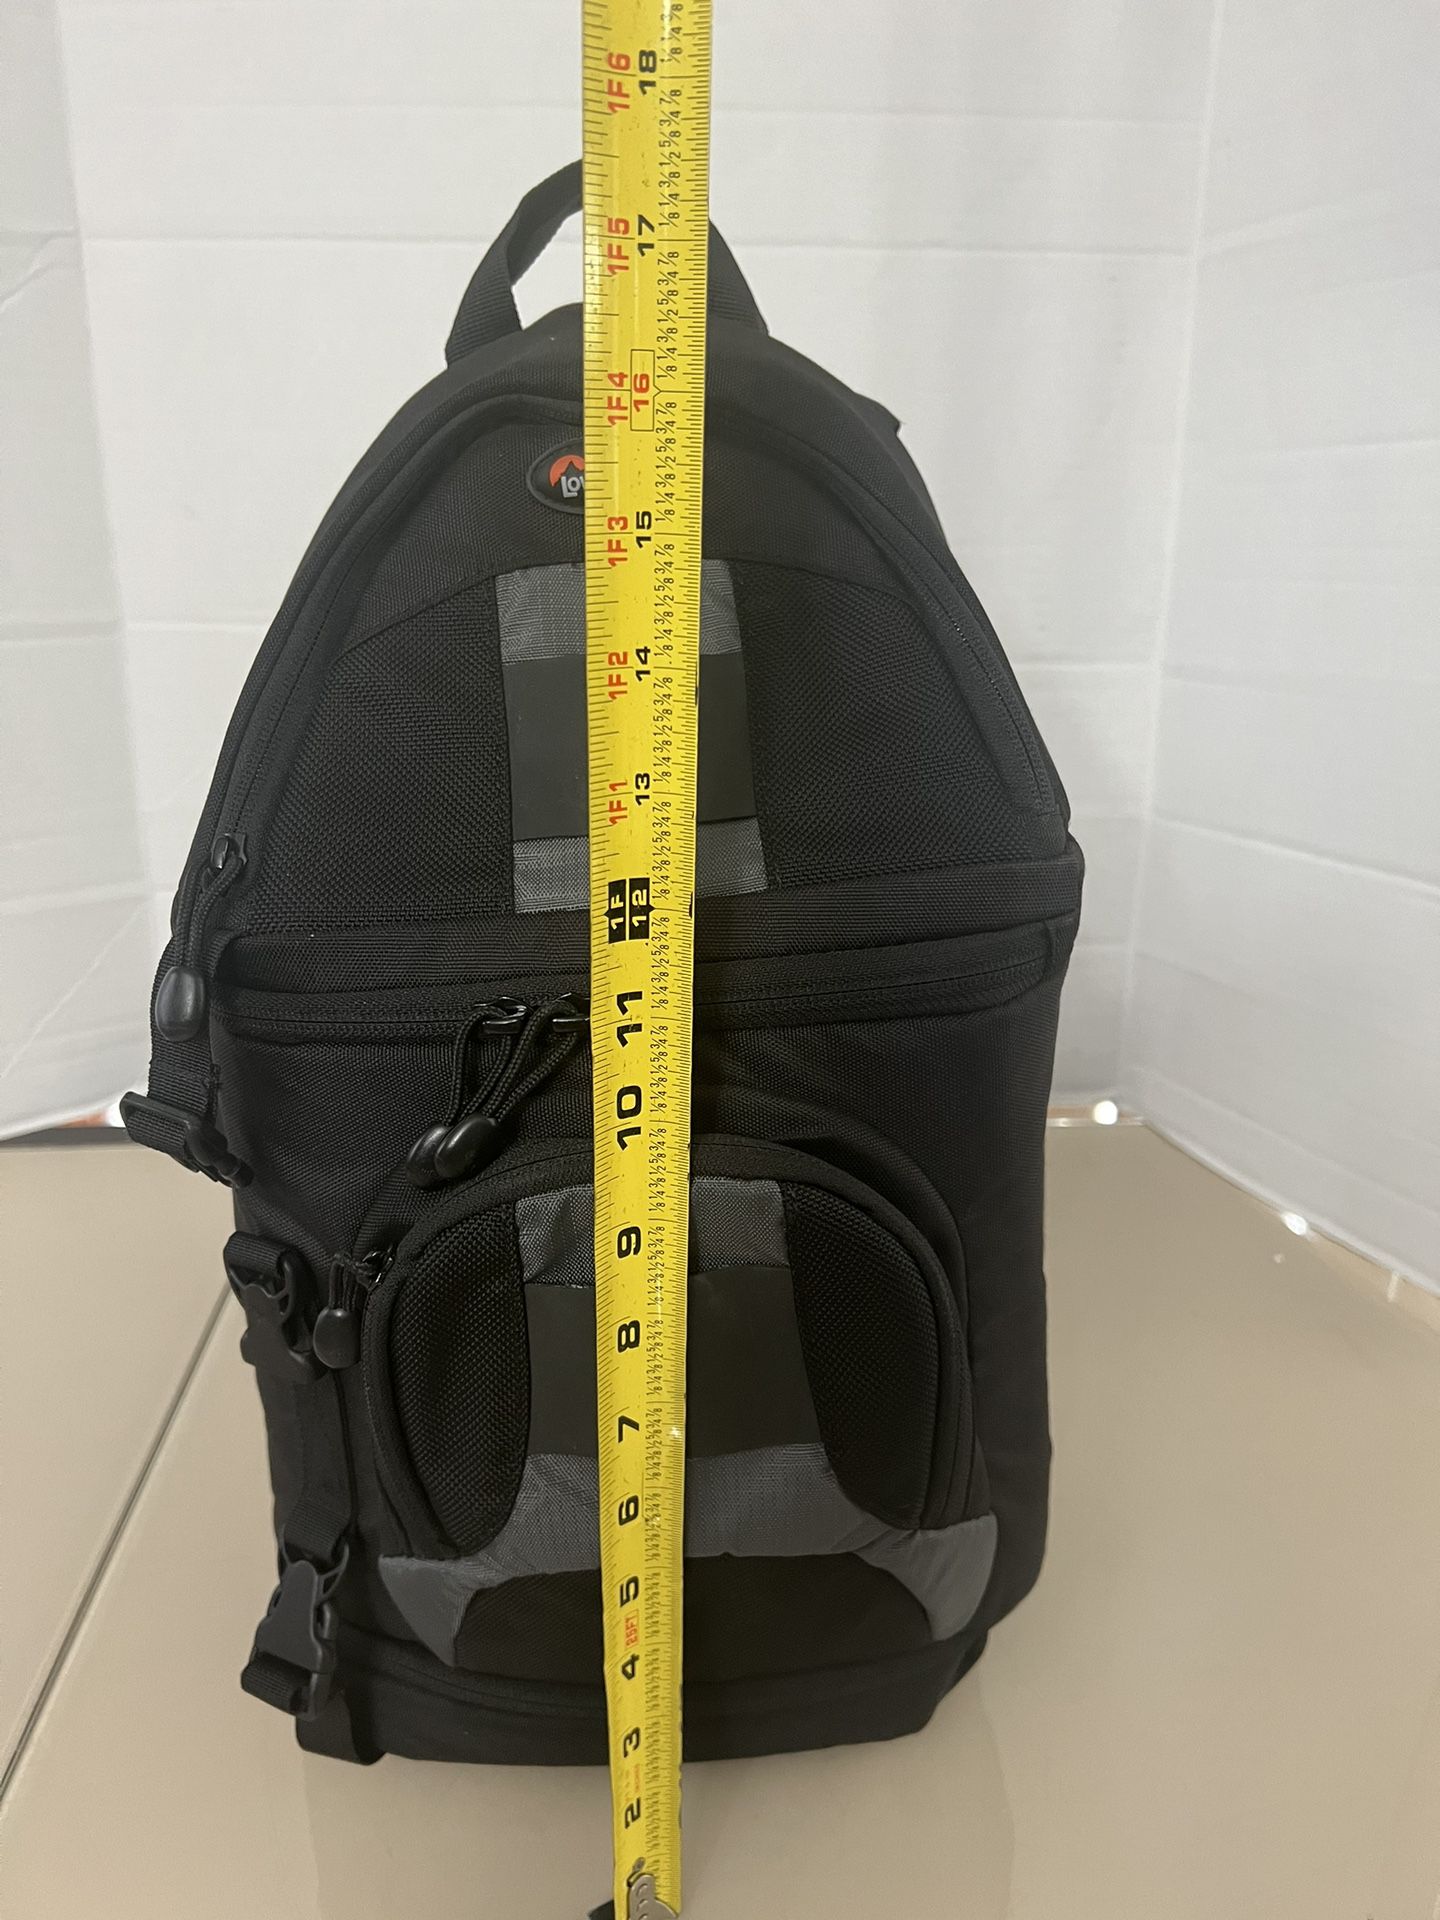 Lowepro Camera Backpack Sling Slingshot 200 AW Padded Multi Pocket All Weather